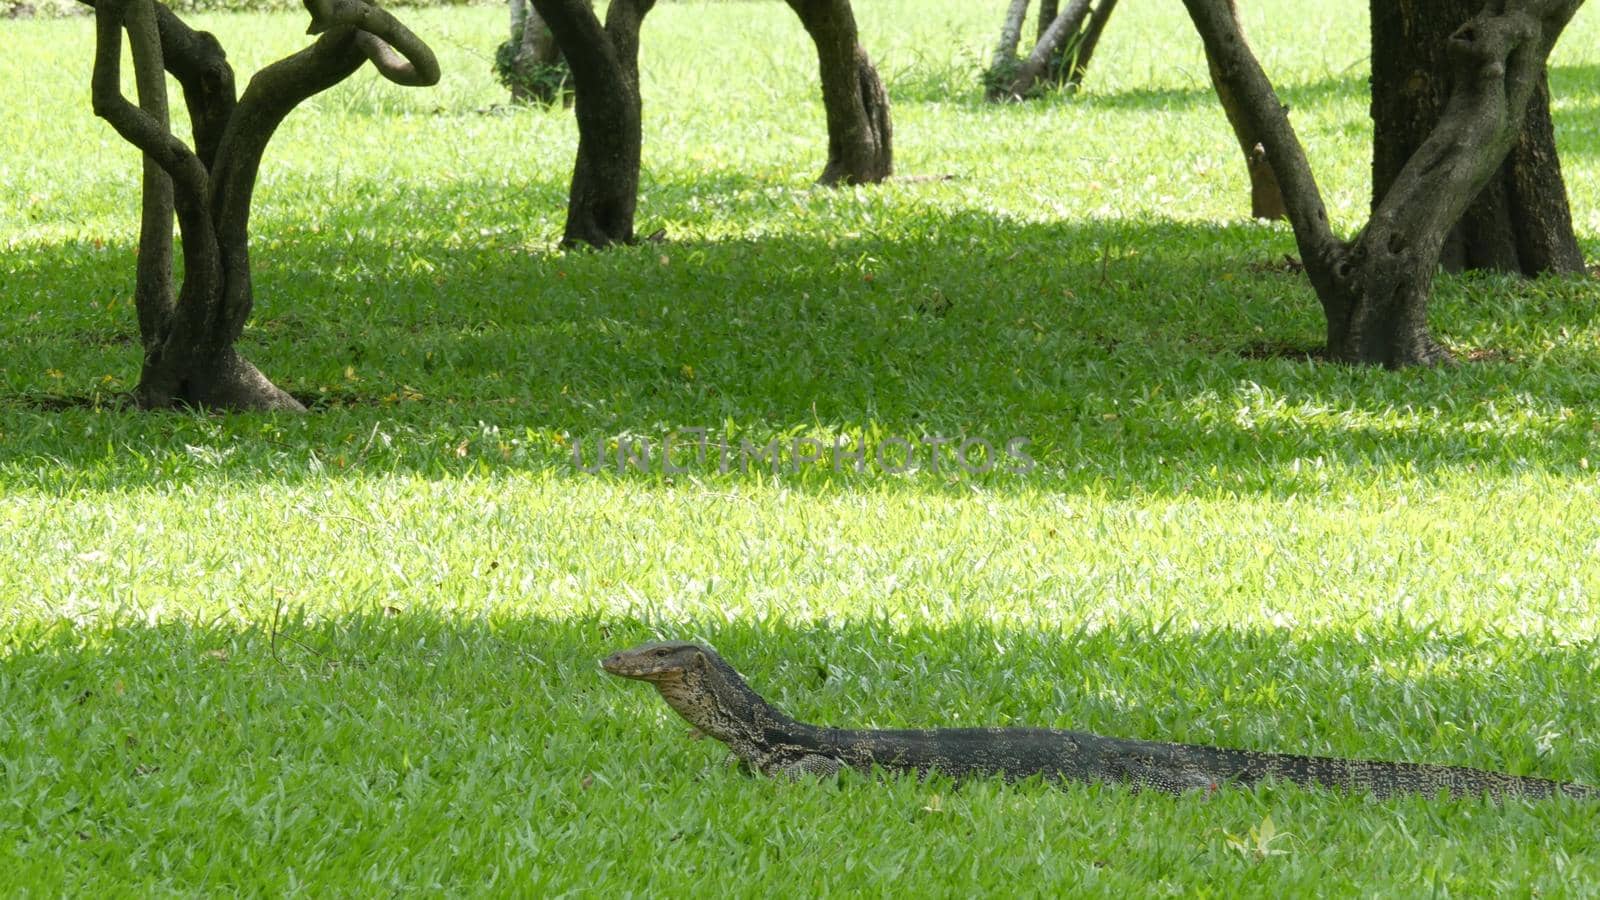 Asian common water monitor large varanid lizard native to Asia. Varanus salvator on the green grass near riverbank, lake or pond. Carnivore Reptile hunting. Wild dragon predator on Bangkok street by DogoraSun